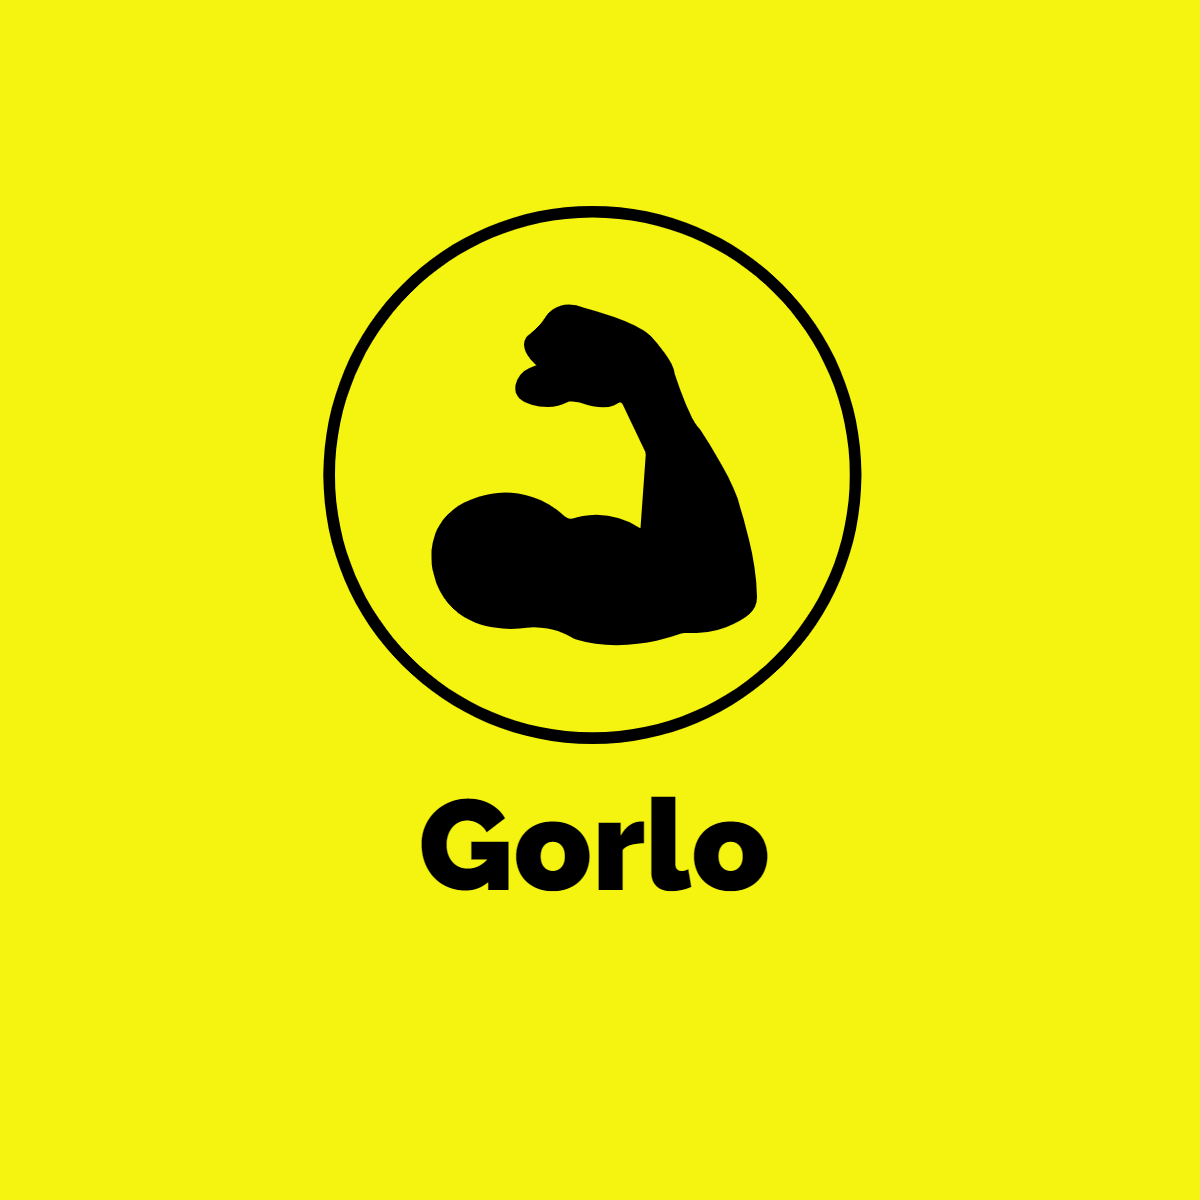 Gorlo